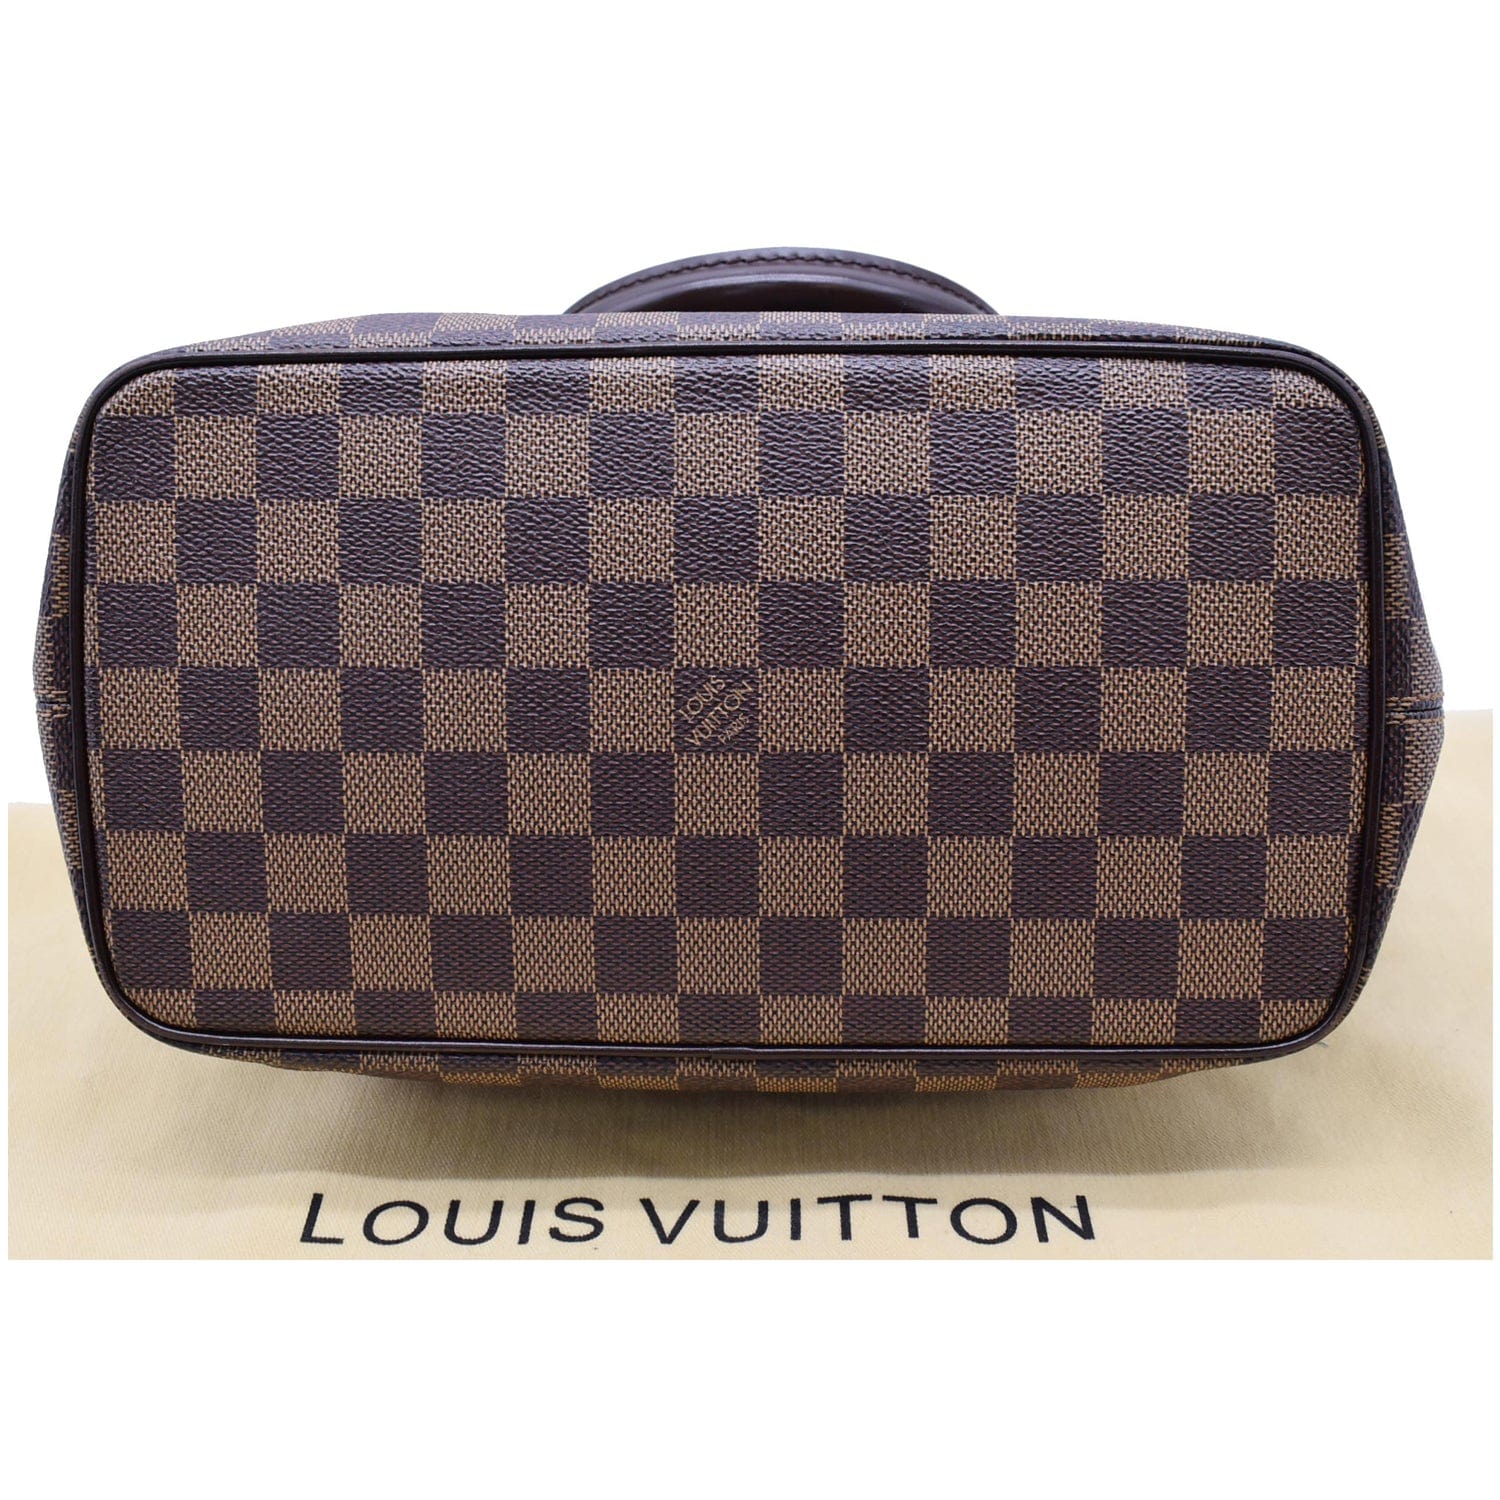 Louis Vuitton Damier Ebene Canvas Saleya PM Bag Louis Vuitton